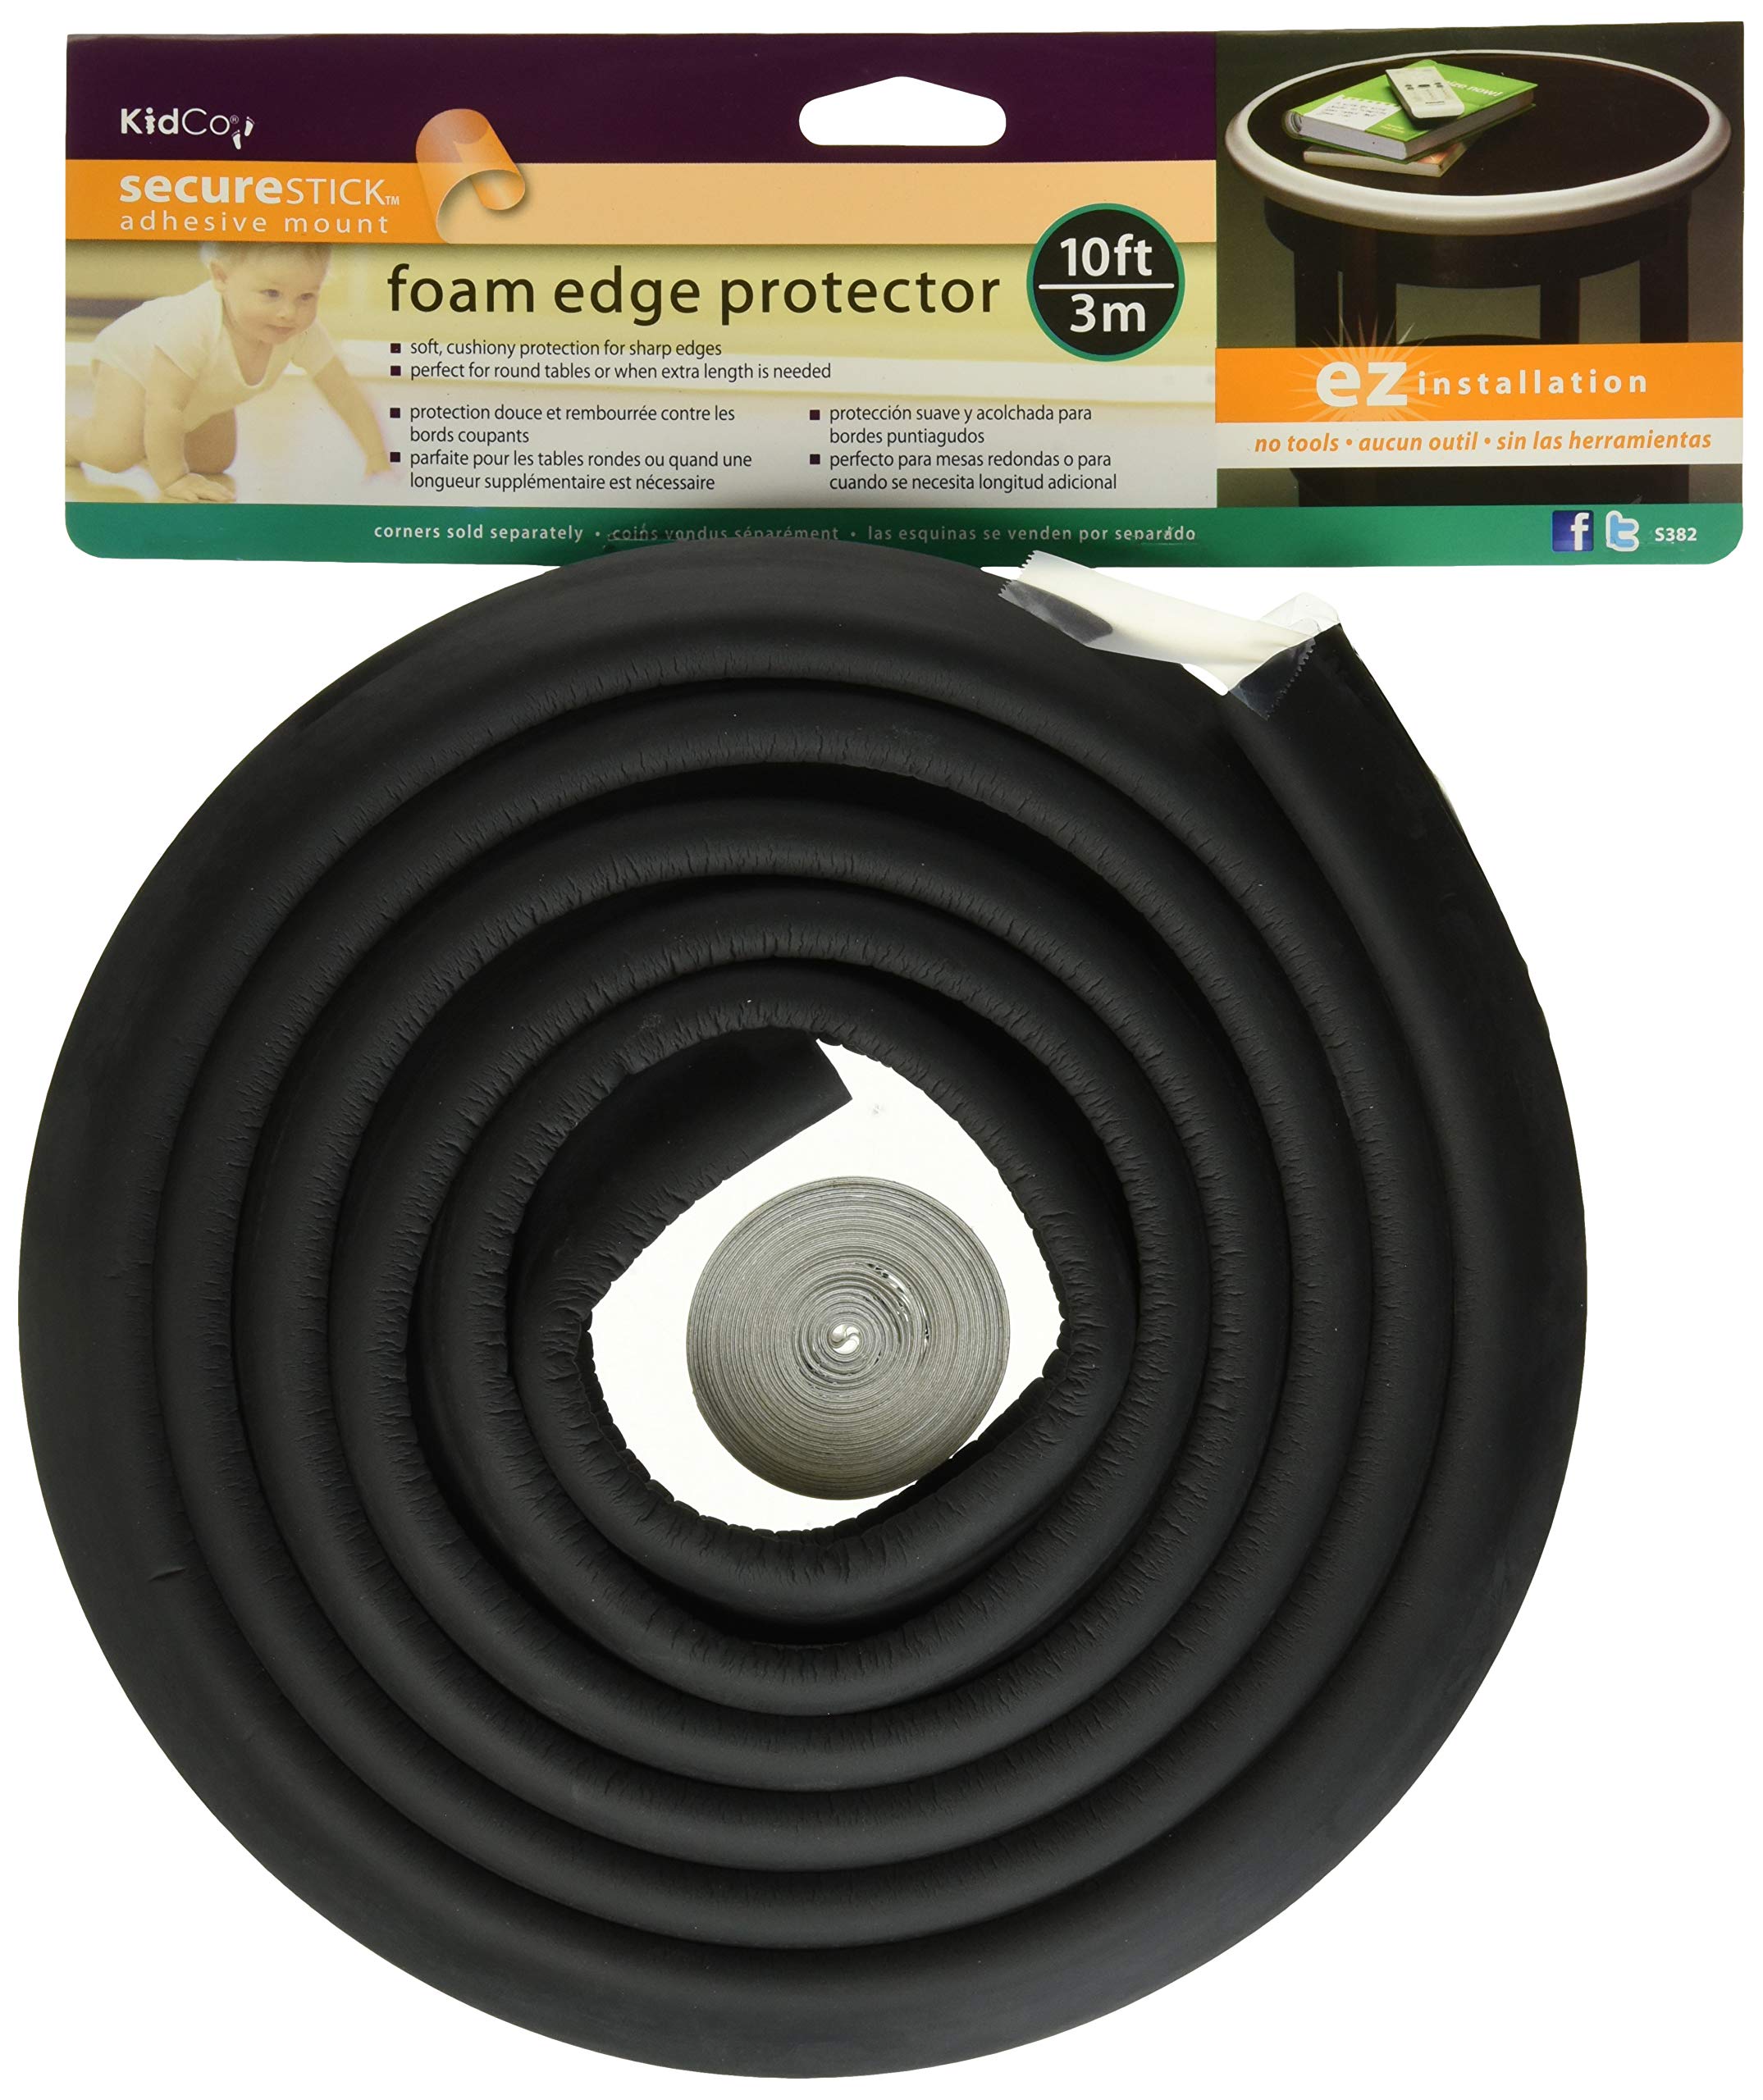 KidCo S382 10' Foam Edge Protector Black